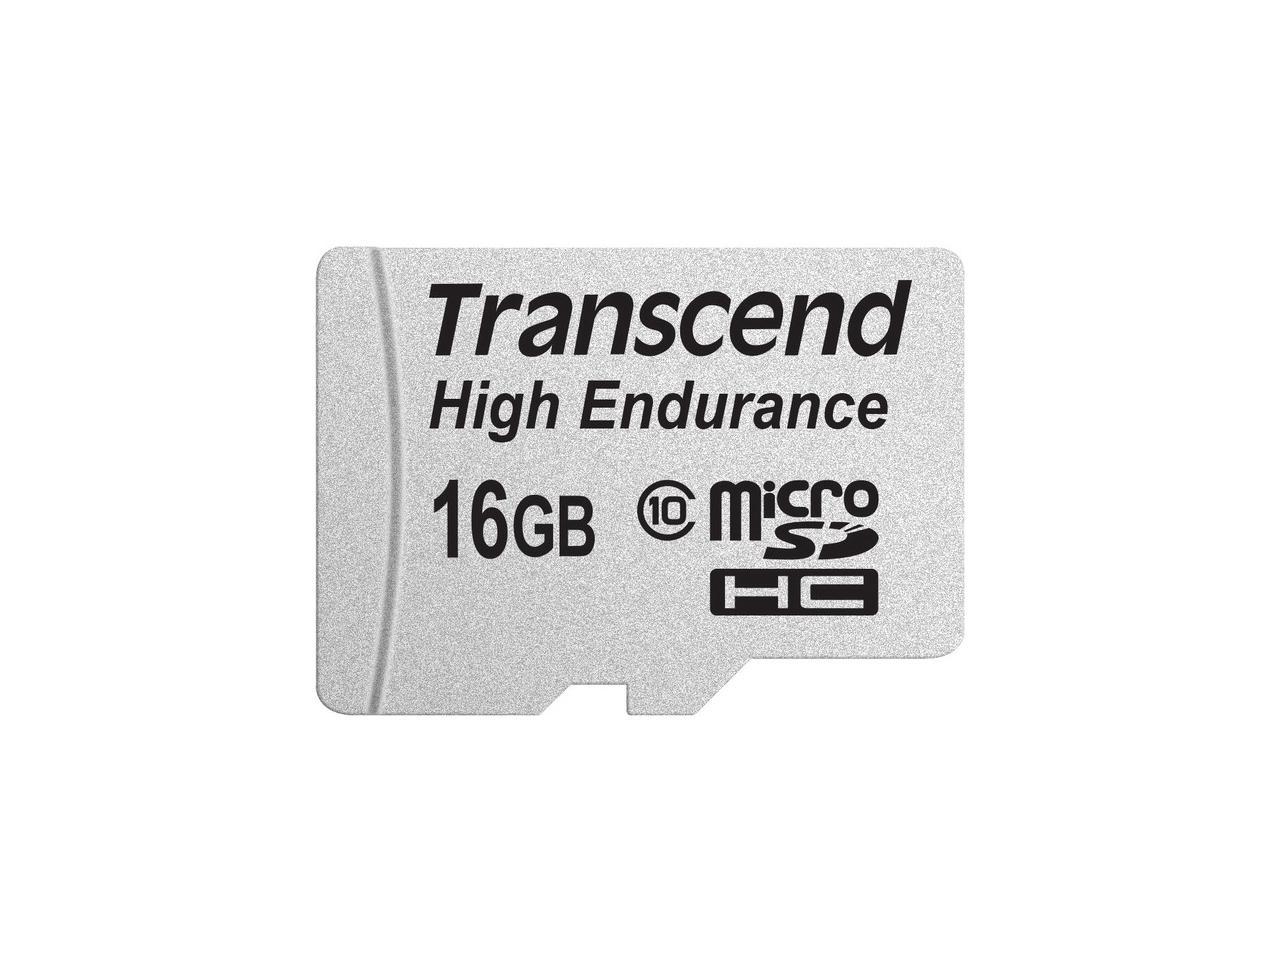 Transcend Endurance MicroSDHC Card CL10 - Newegg.com